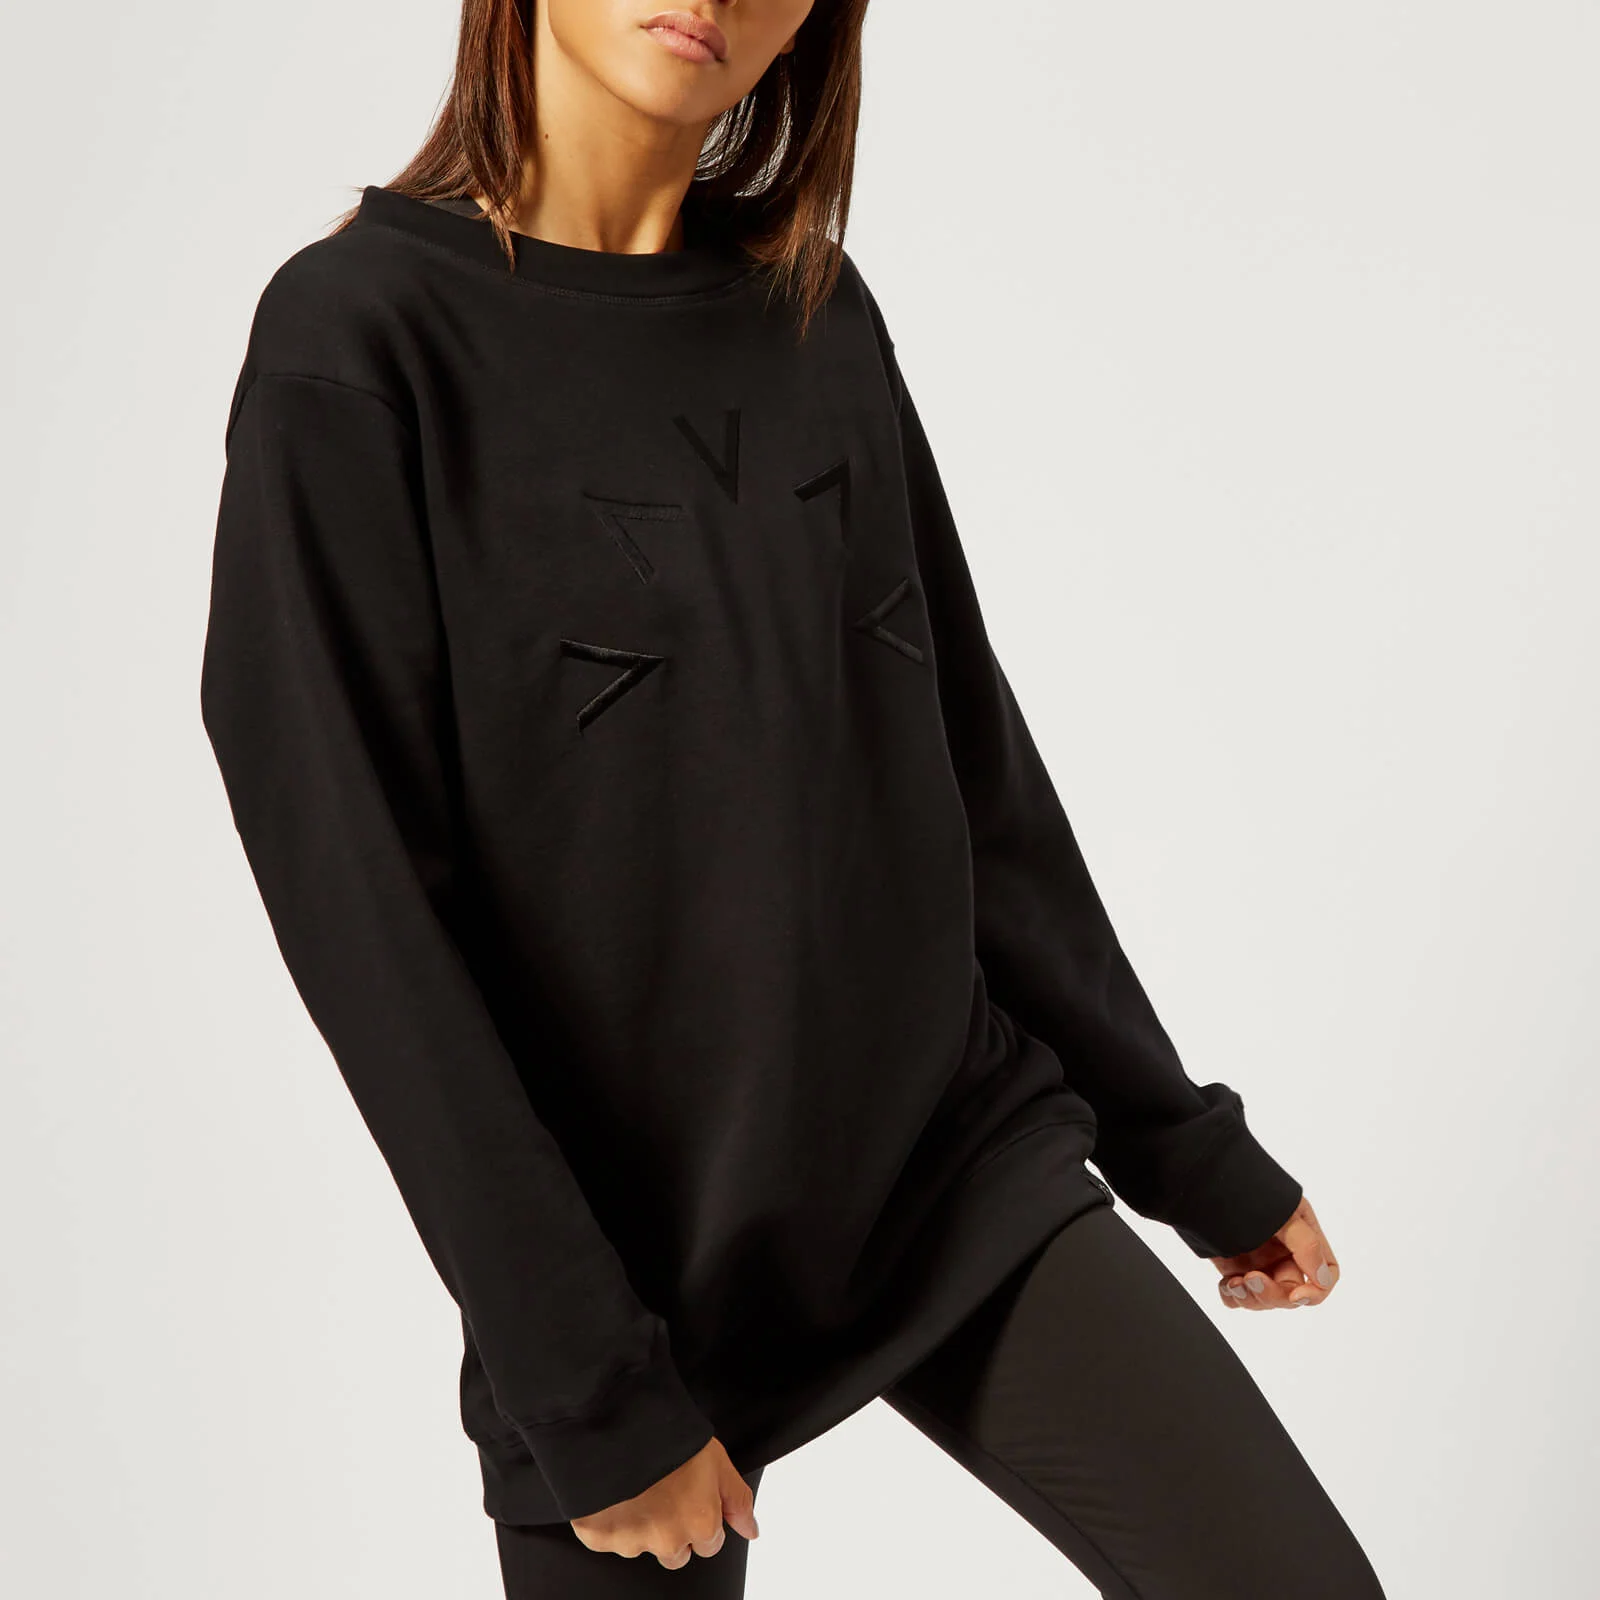 Varley Women's Crestwood Sweatshirt - Black Image 1